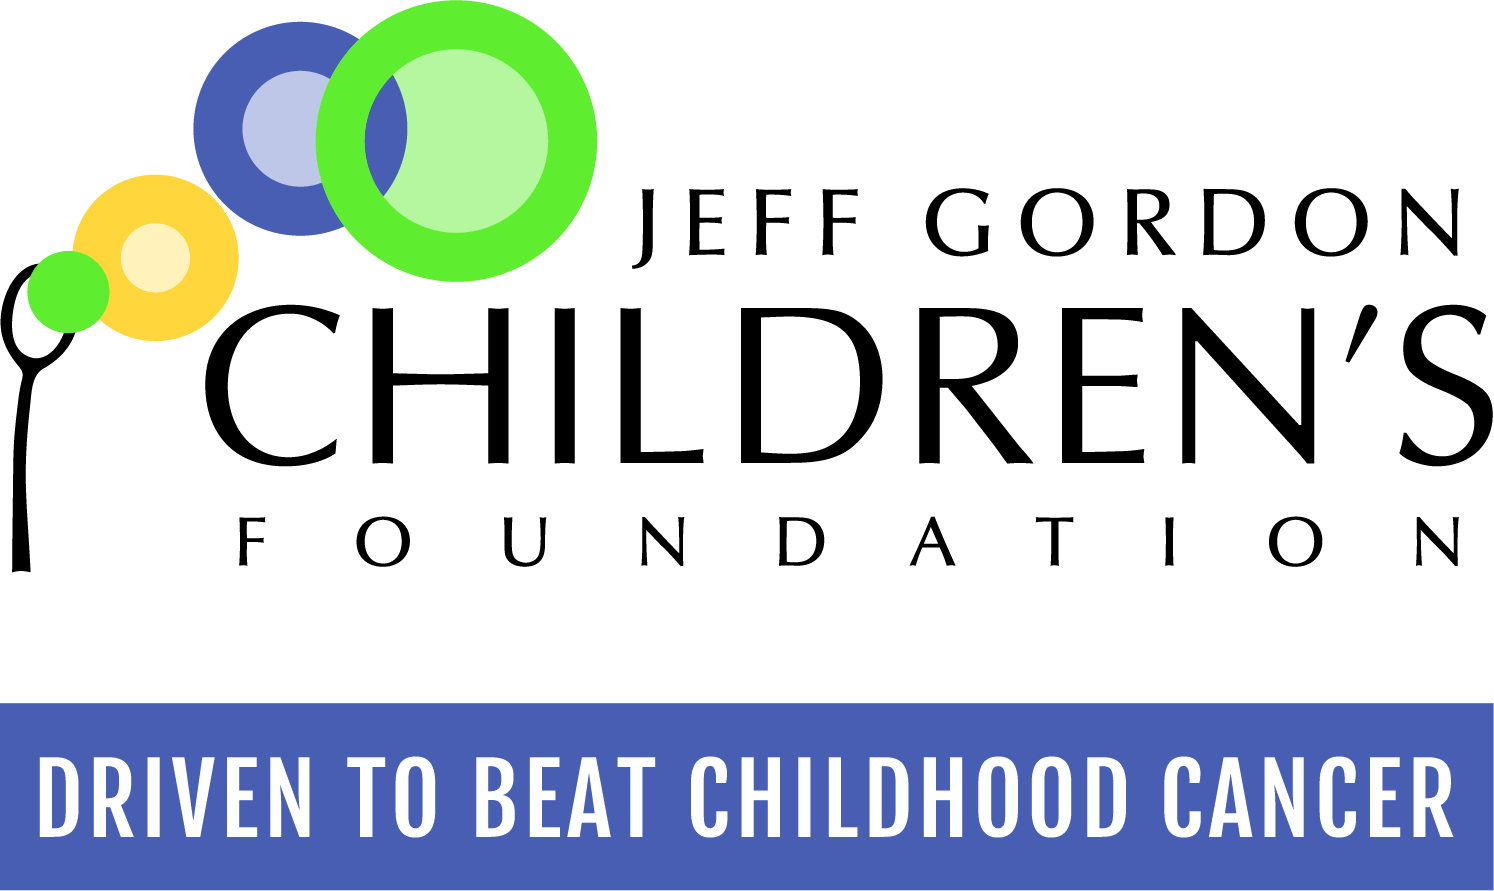 Jeff Gordon Children’s Foundation logos